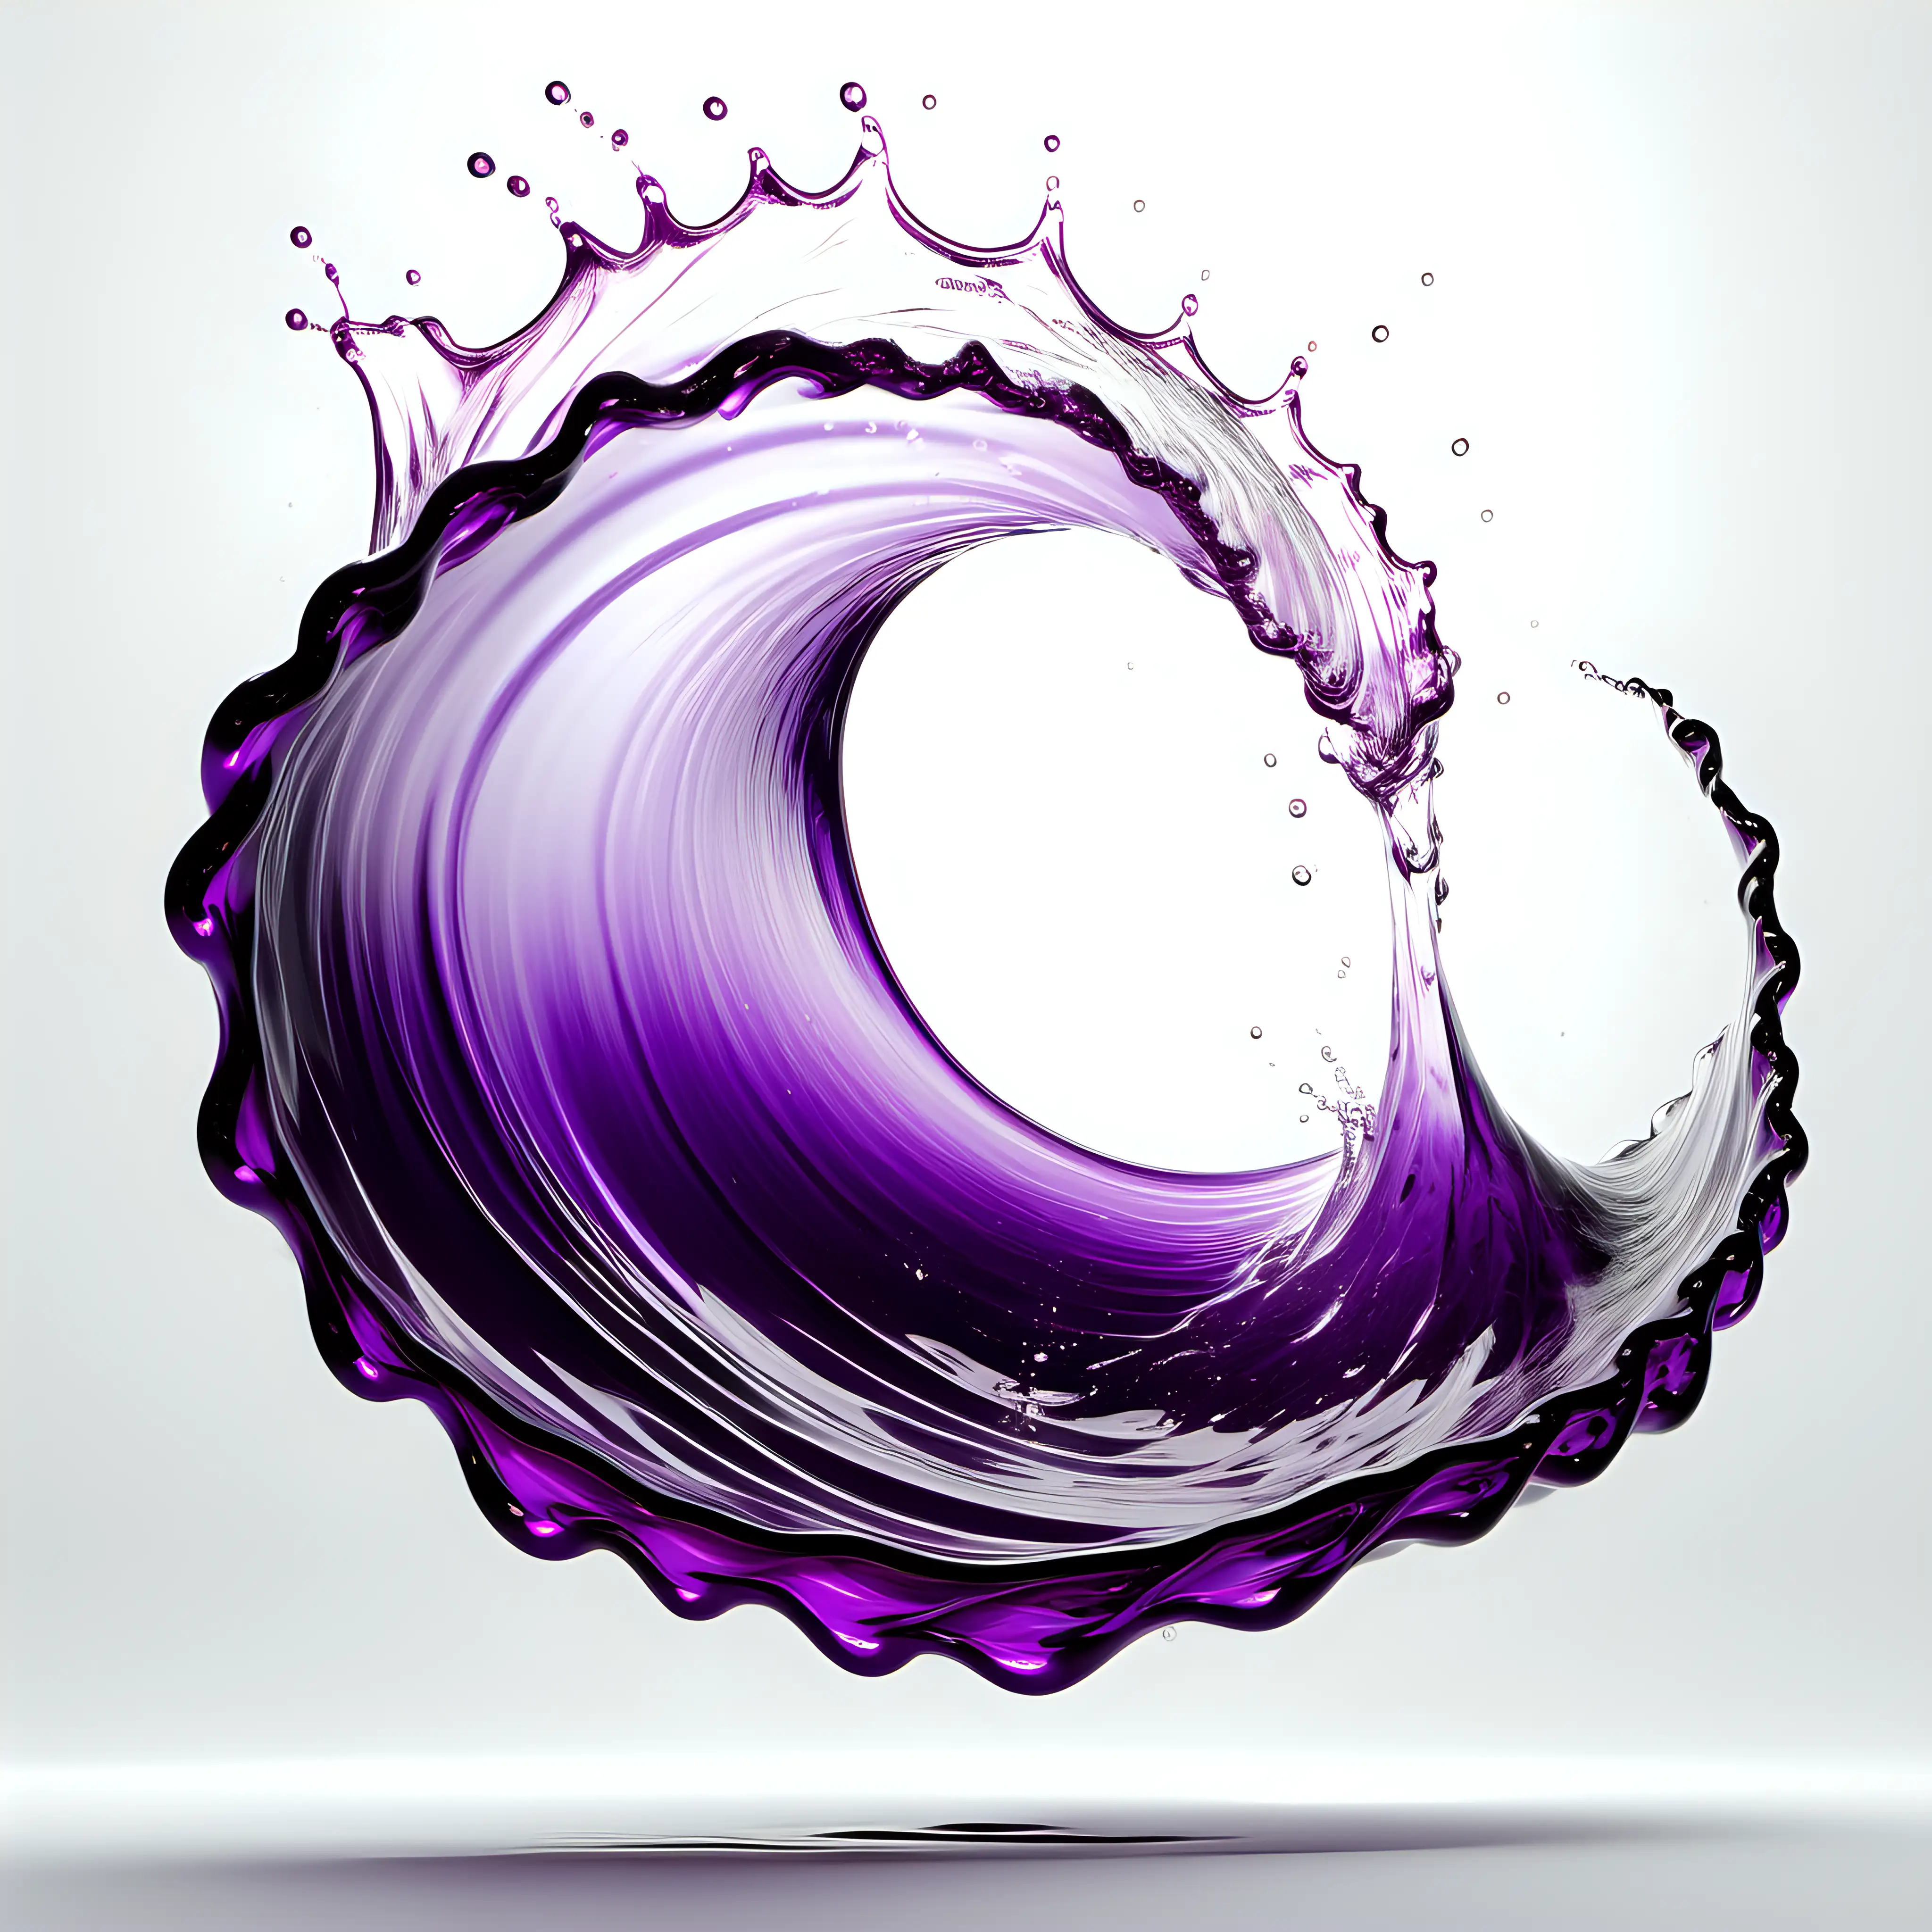 Elegant Side Swirl Wave Splash in Purple Oil on White Background